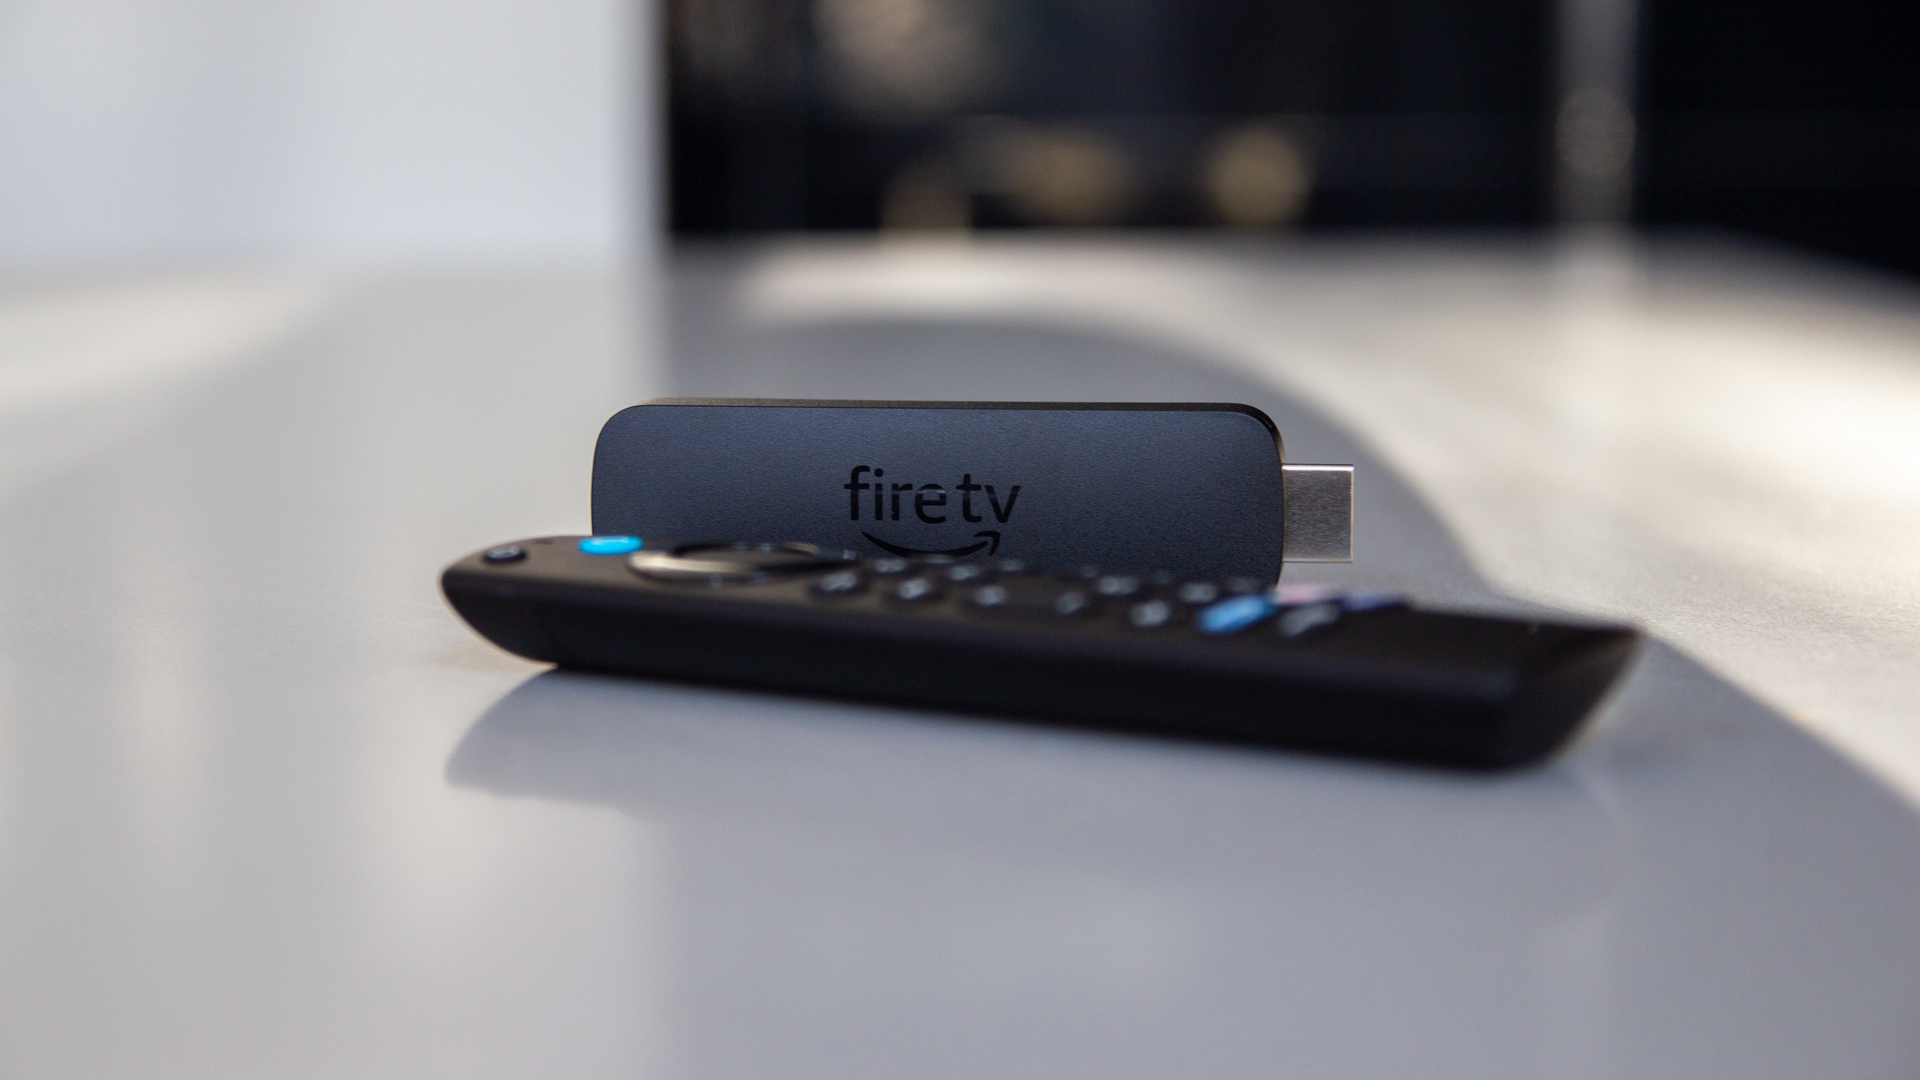 Fire TV Stick 4K Max review: A speedy streamer with messy menus